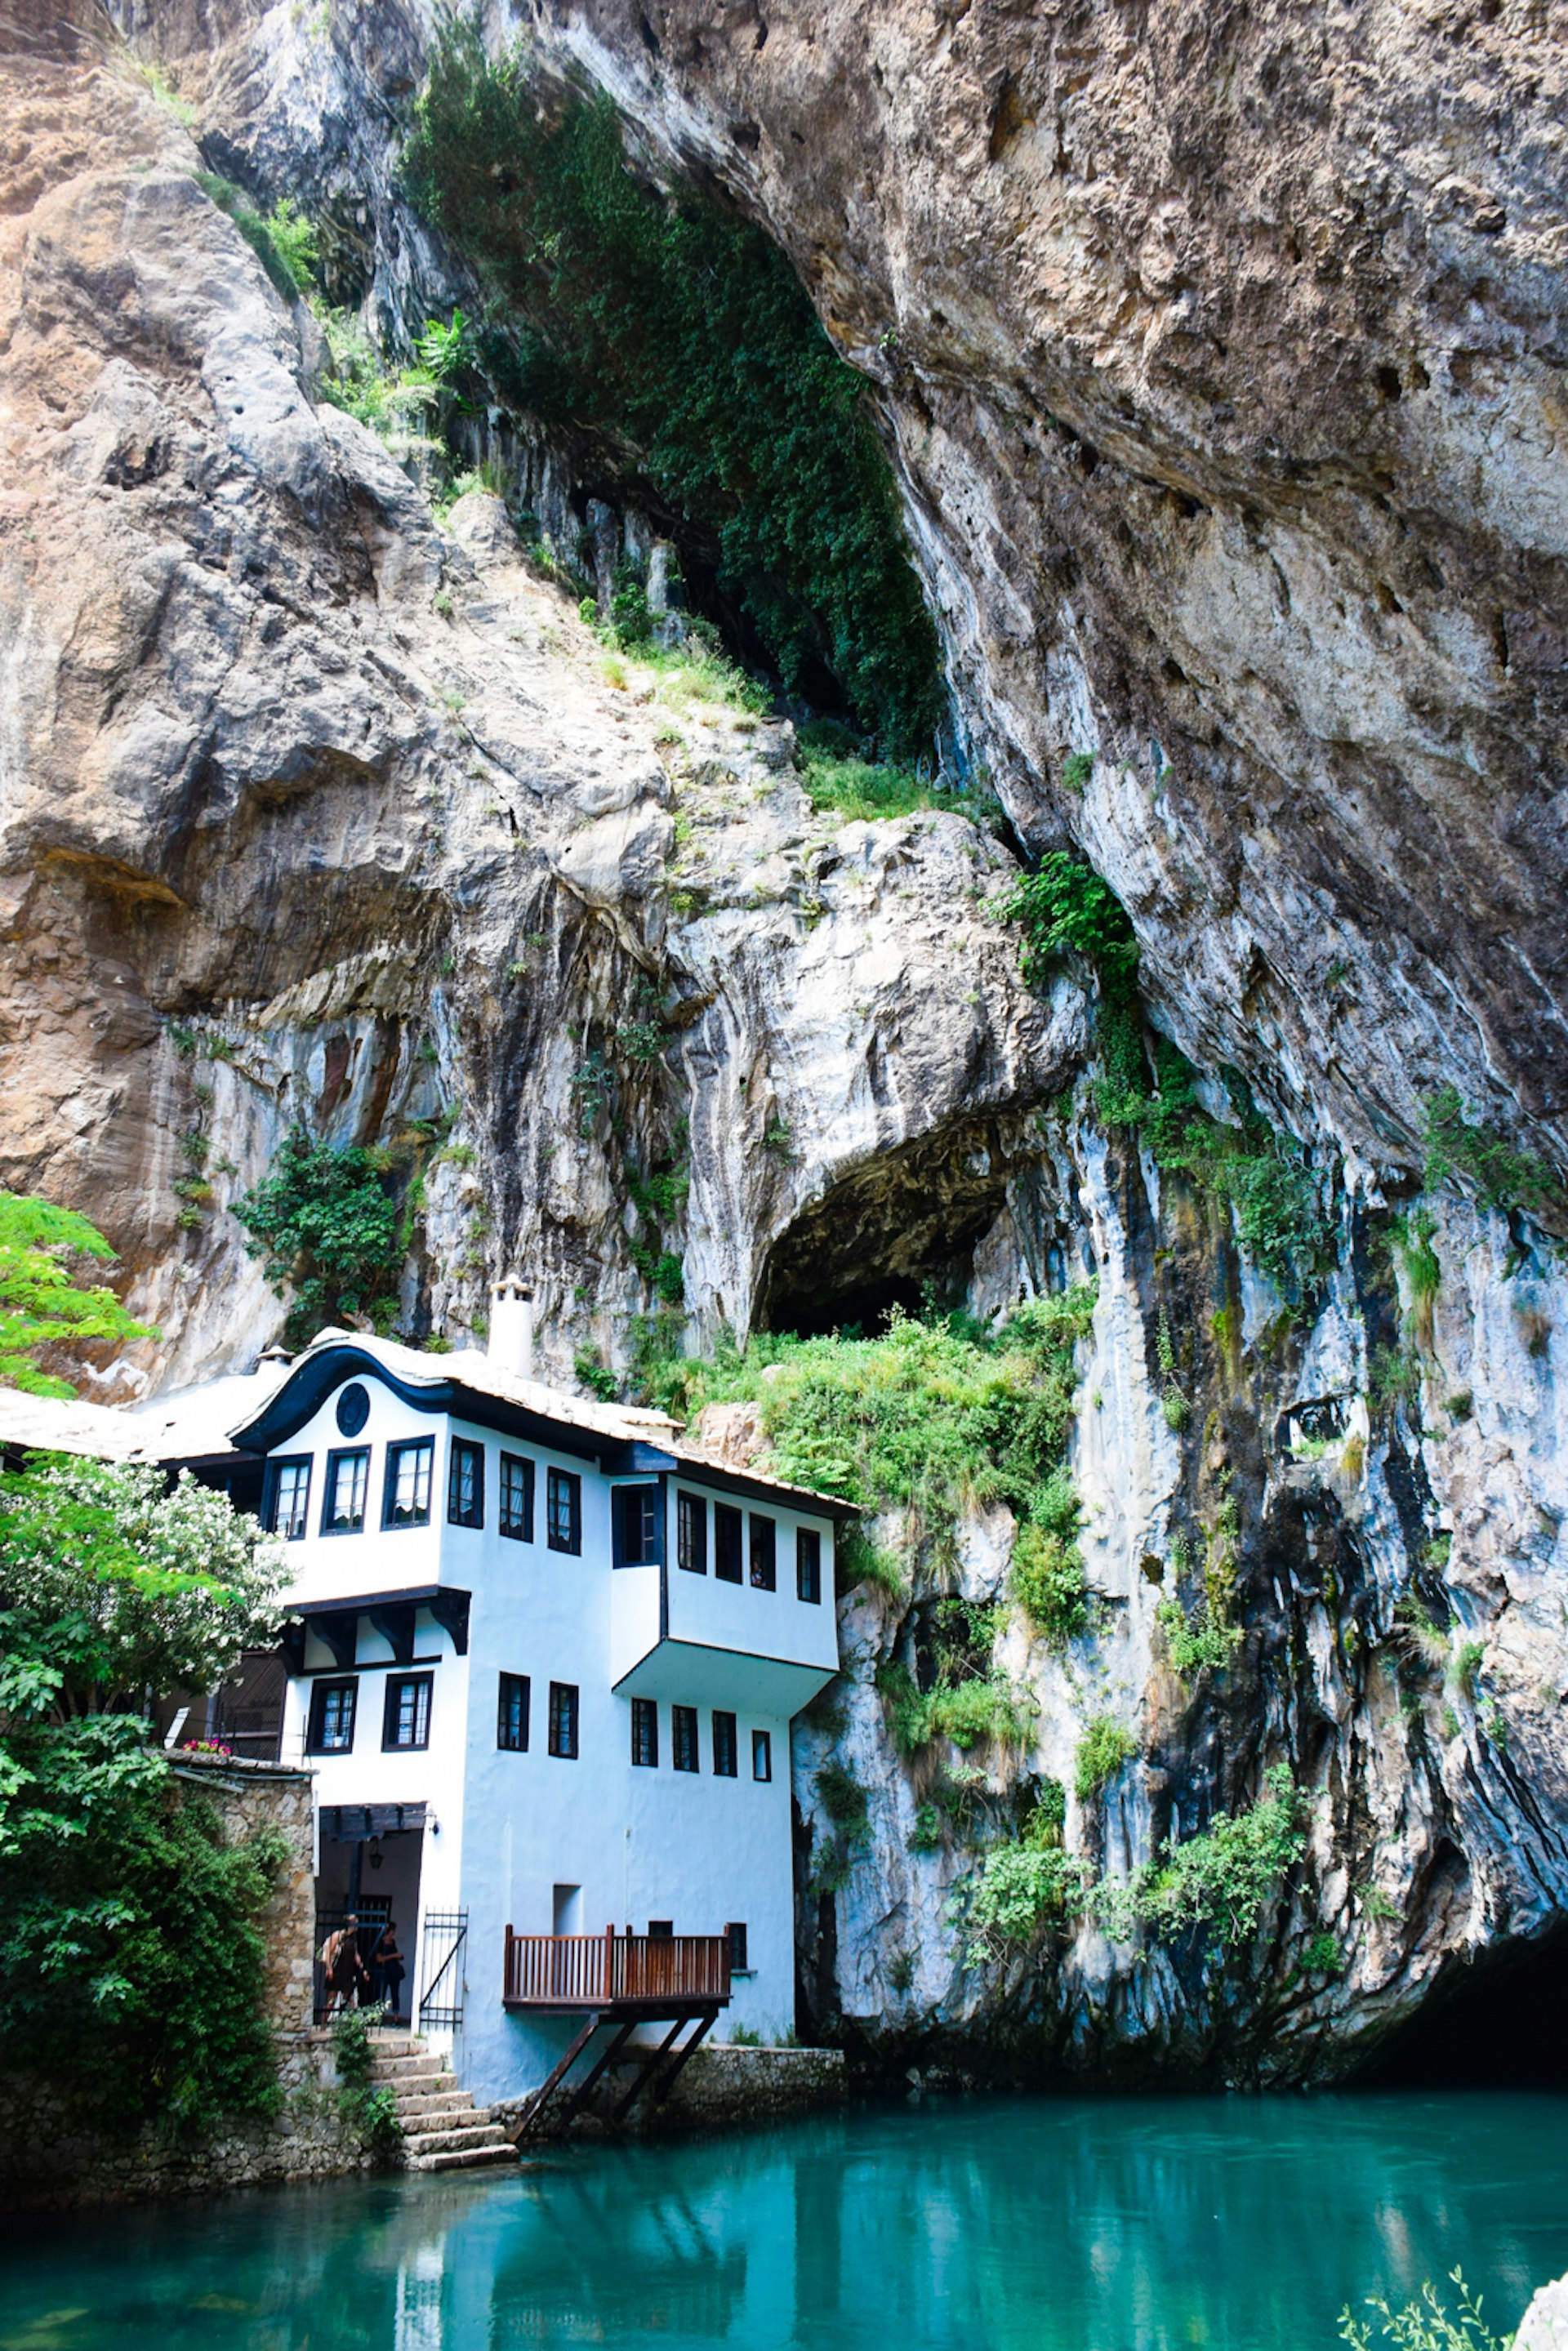 The Blagaj Tekija sits by the River Buna, overshadowed by precipitous cliffs